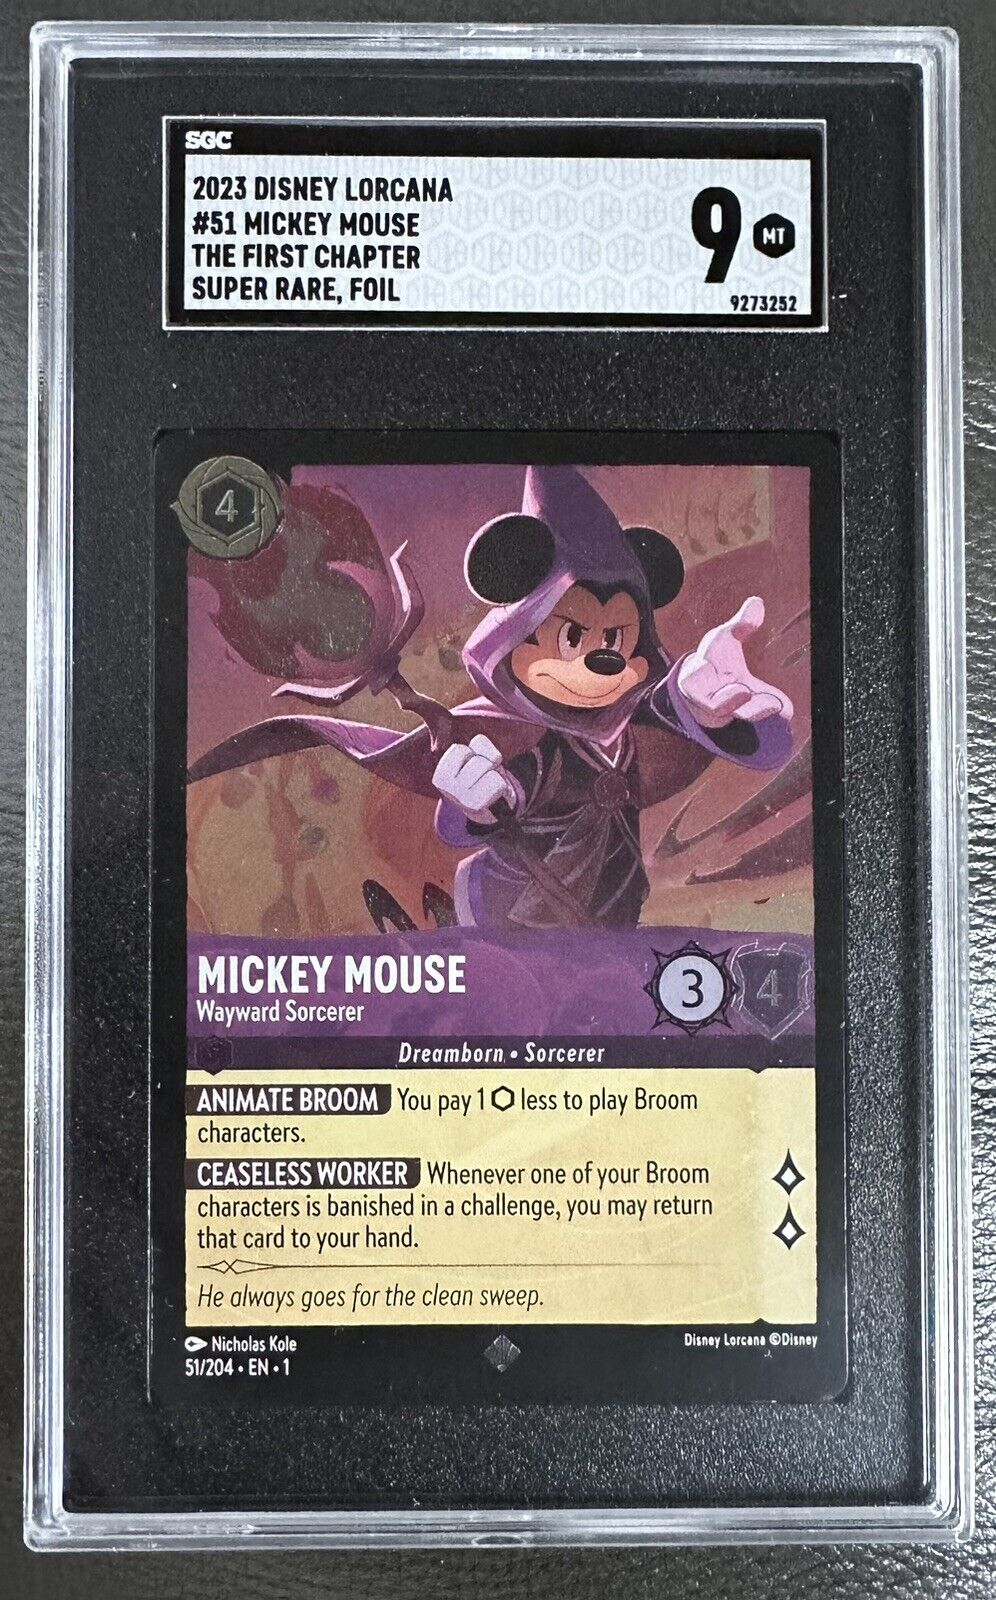 2023 Disney Lorcana #51 Mickey Mouse Wayward Sorcerer Super Rare FOIL SGC 9